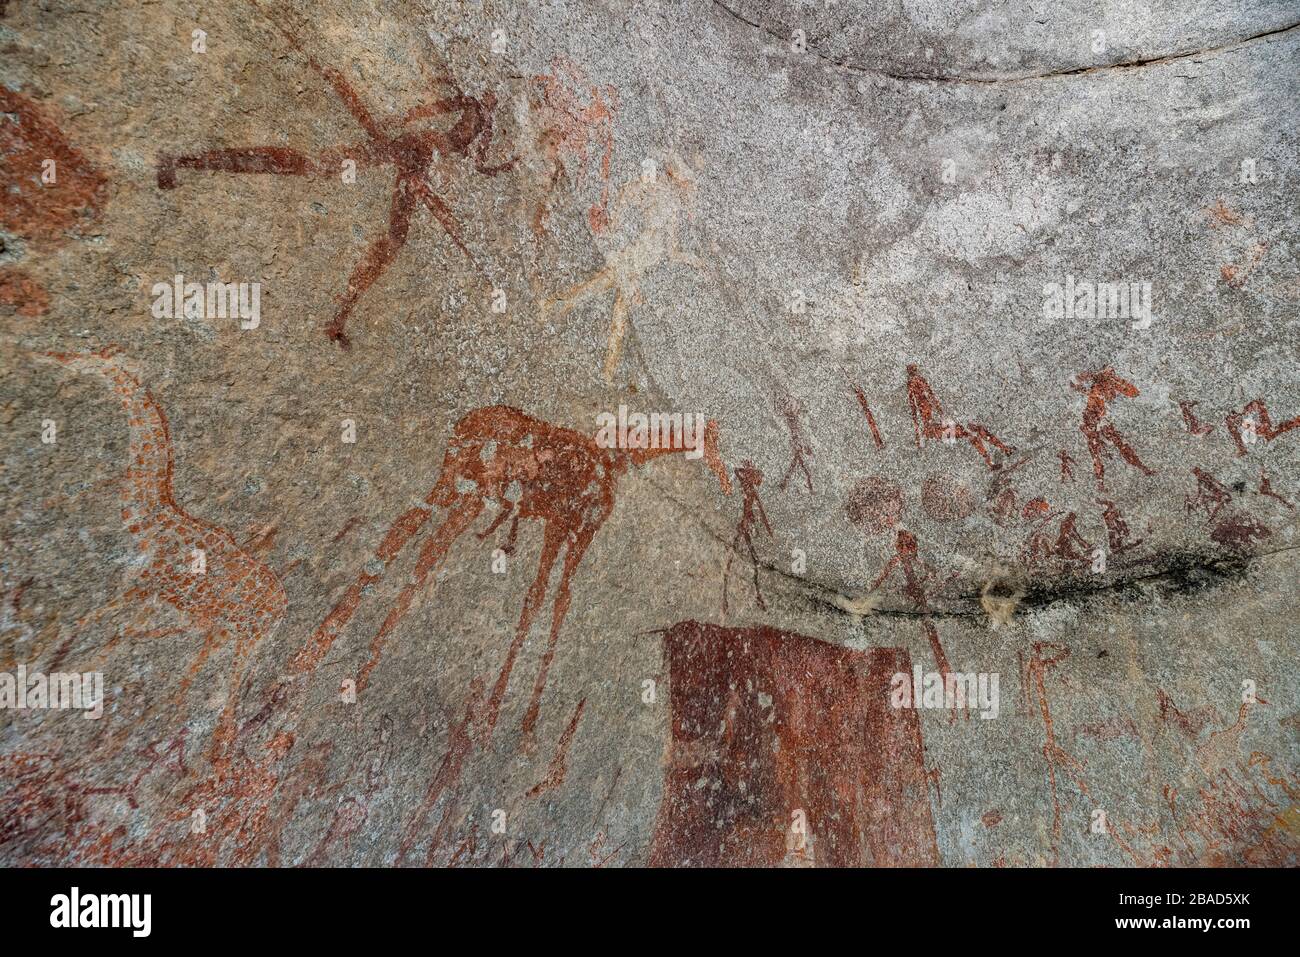 San rock art in Silozwane Cave, Matobo National Park, Zimbabwe Stock Photo